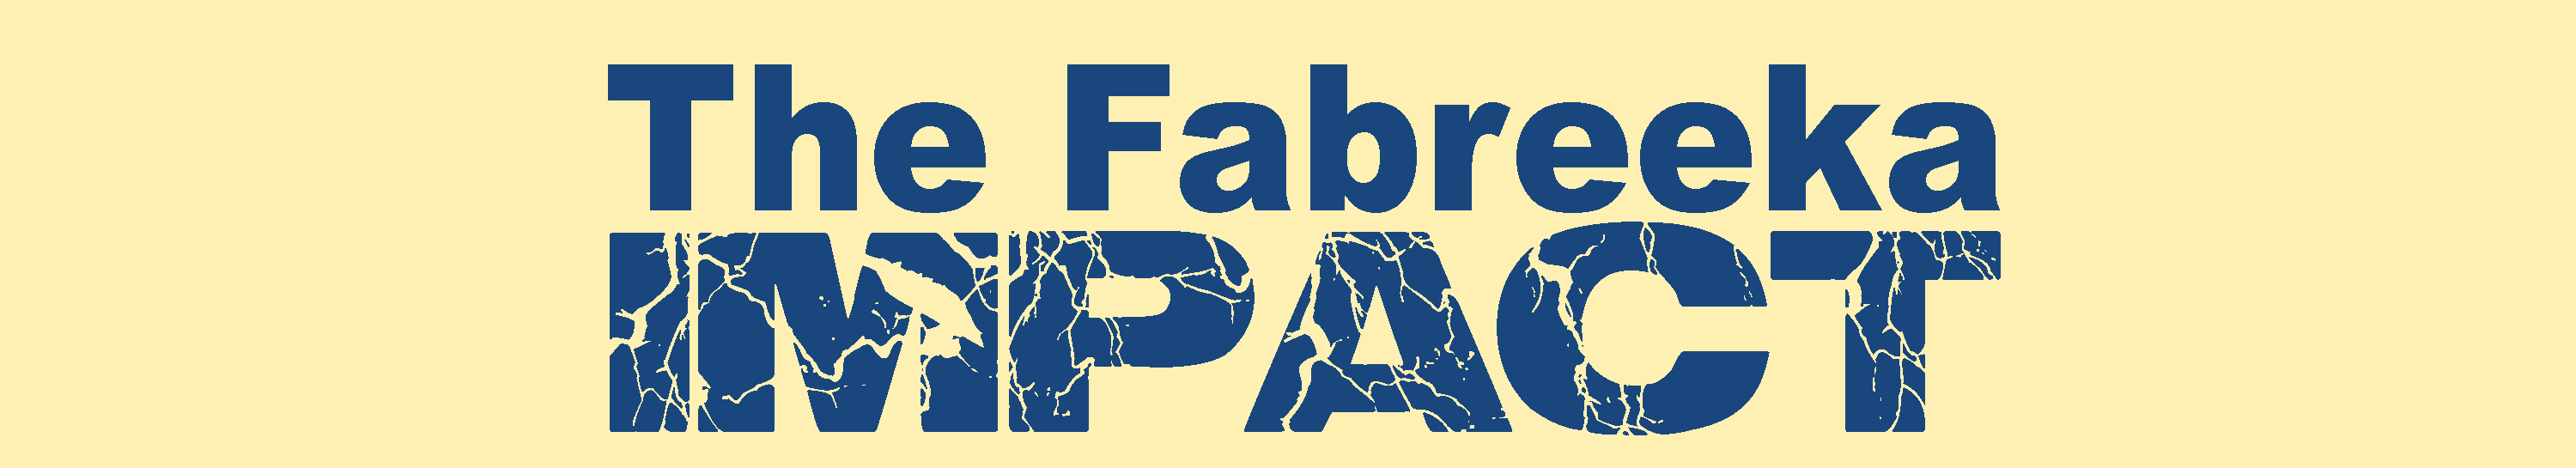 The Fabreeka Impact Blog image